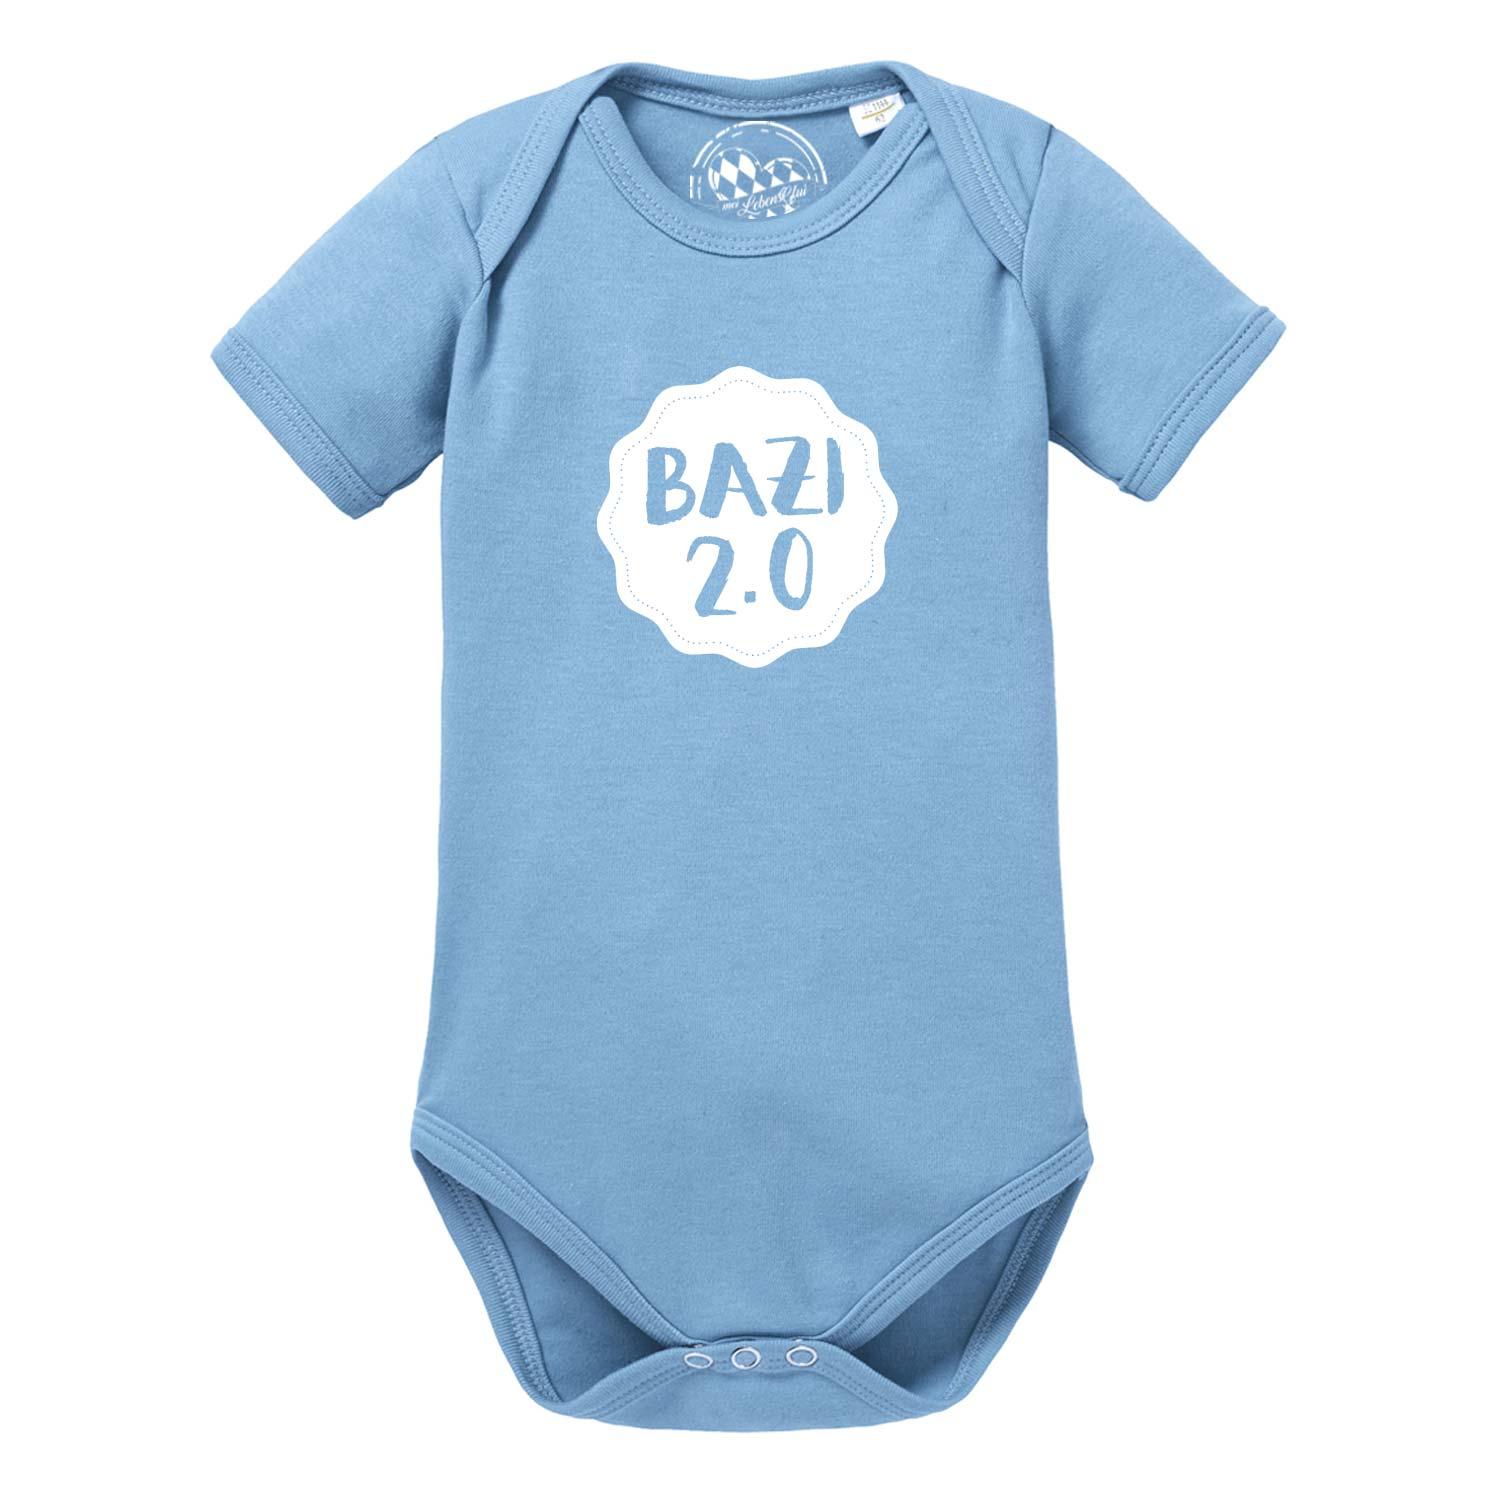 Baby Body "Bazi 2.0" - bavariashop - mei LebensGfui